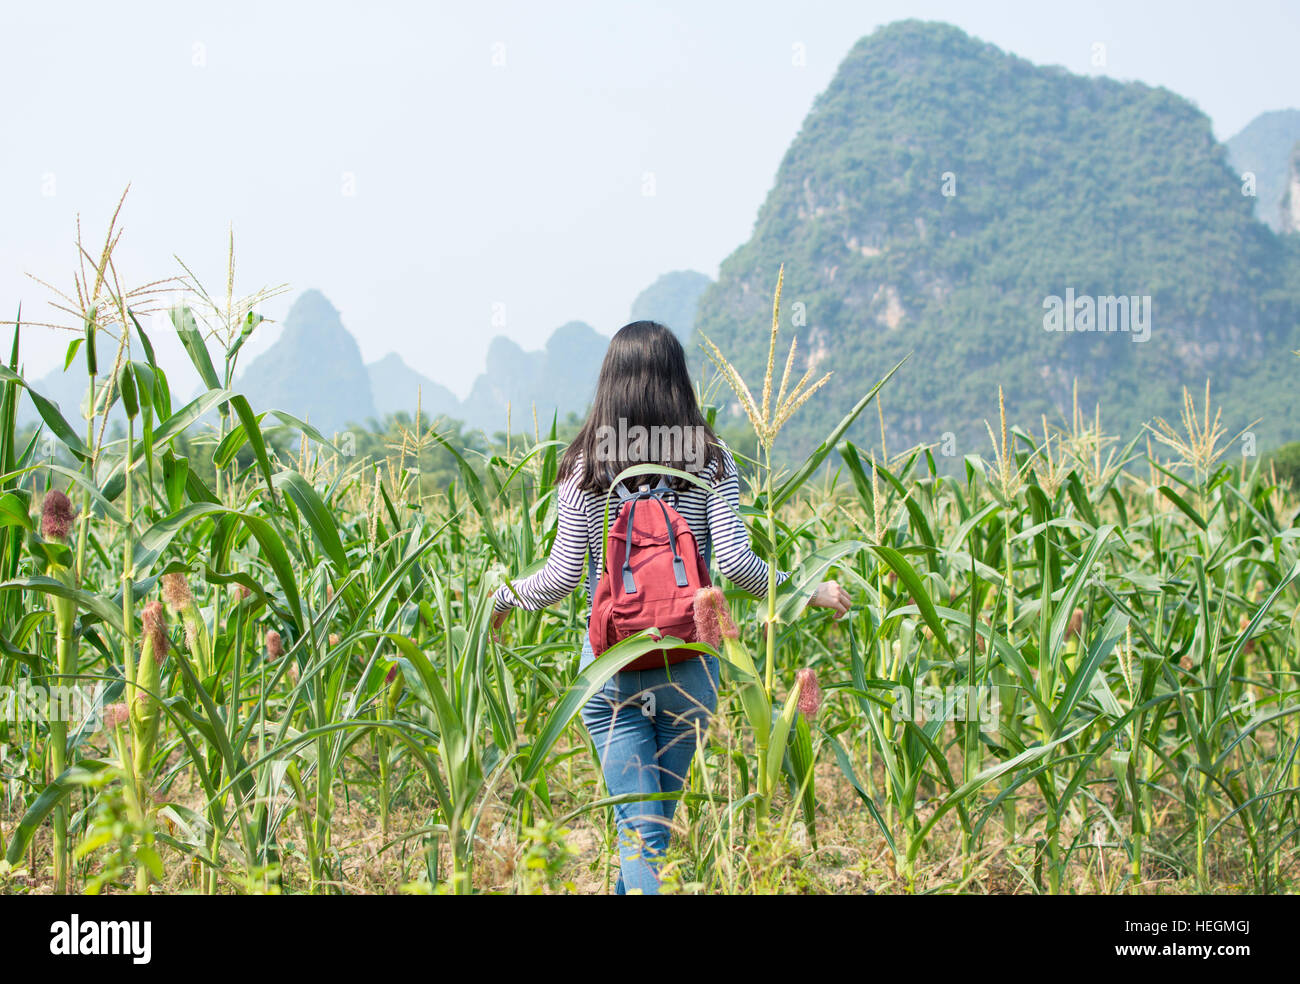 Girl walking in a corn field with karst scenery Stock Photo